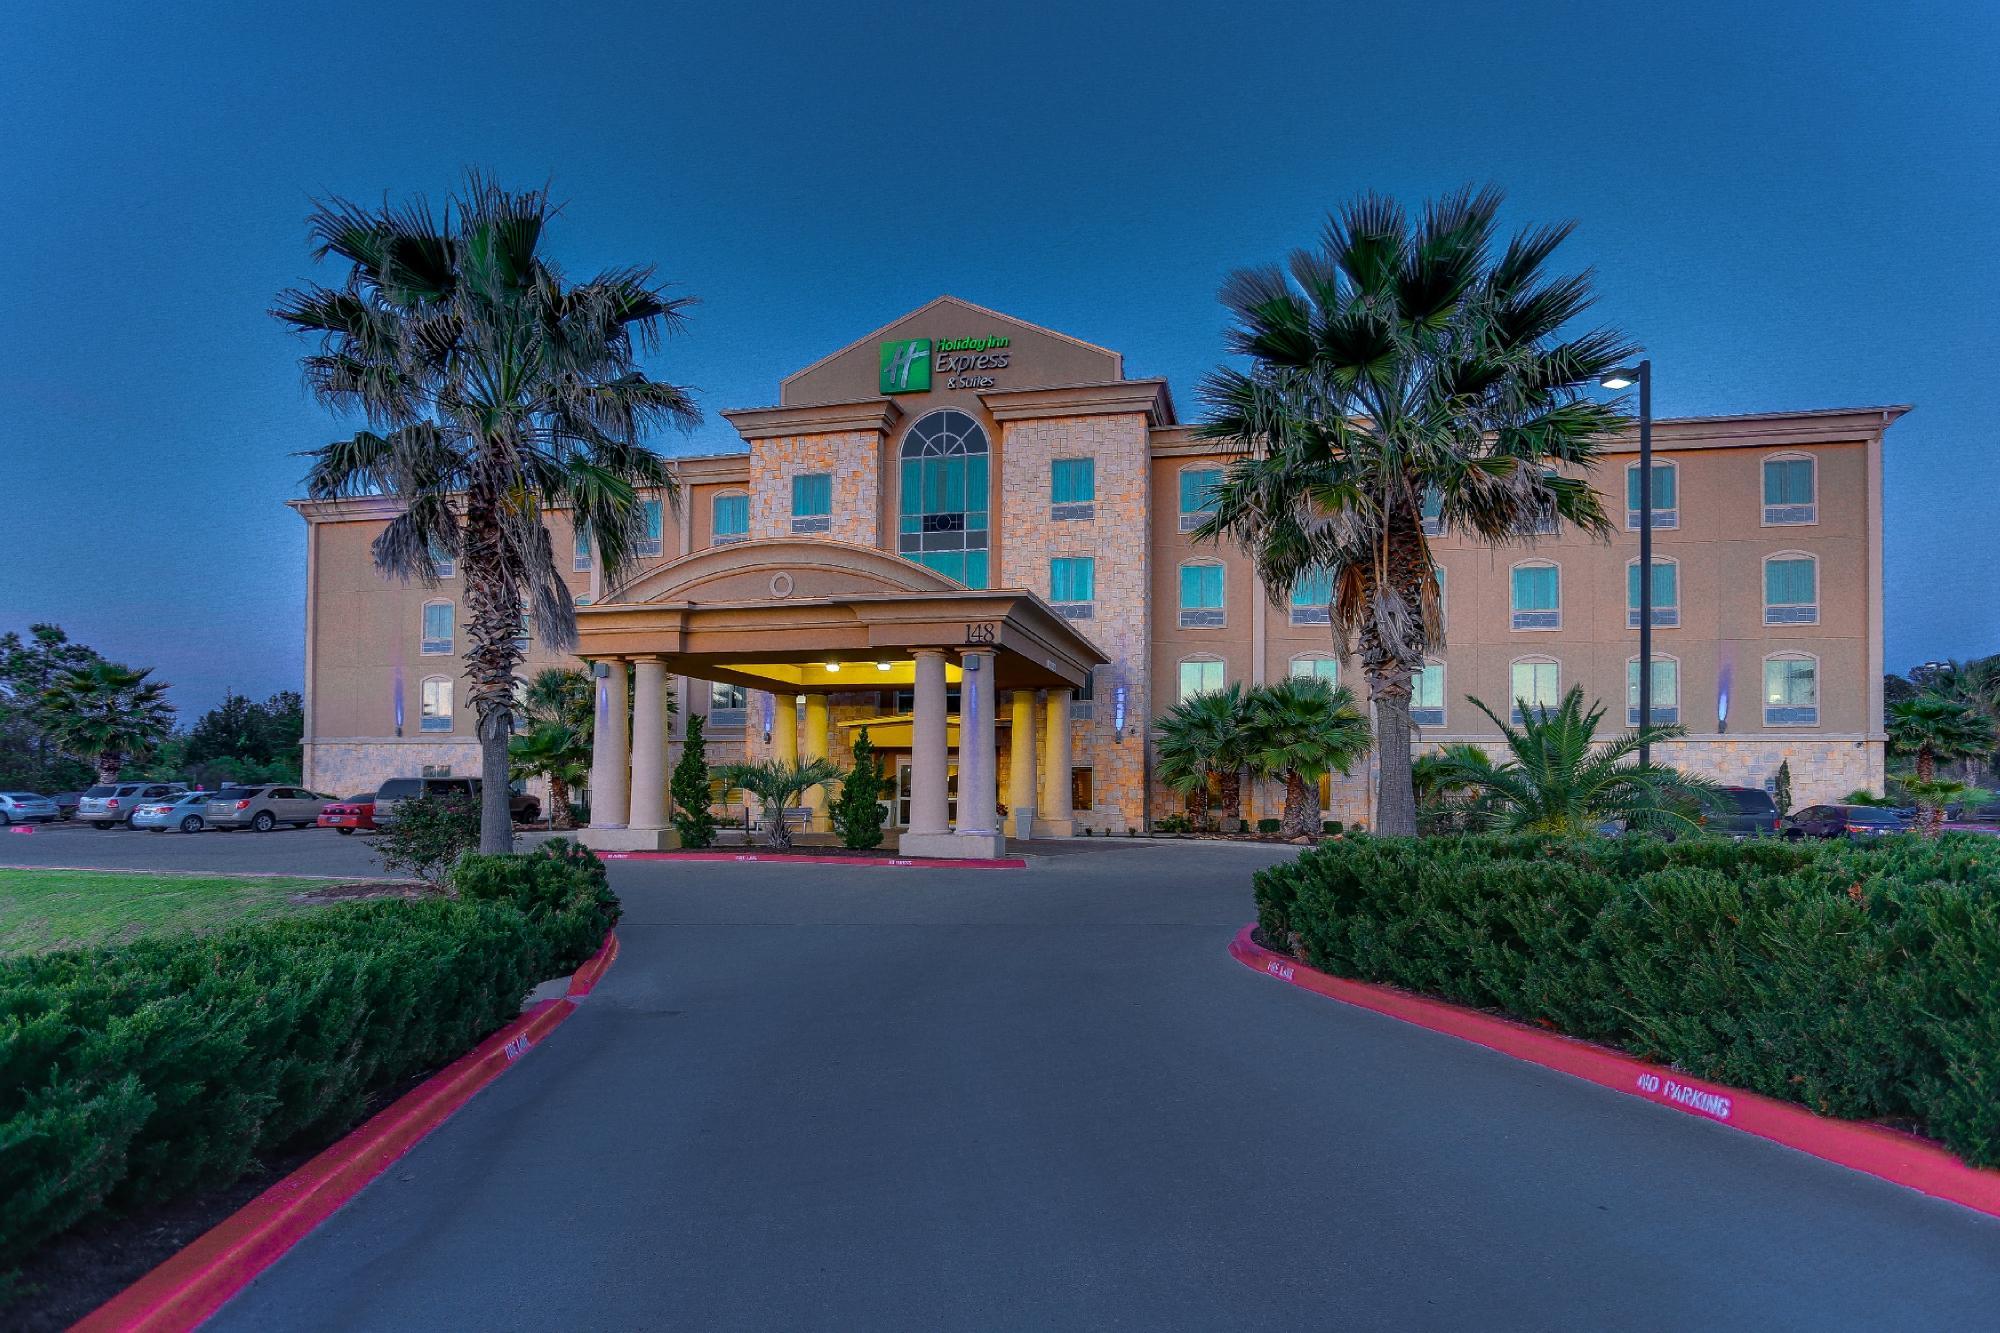 Photo of Holiday Inn Express & Suites Huntsville, Huntsville, TX